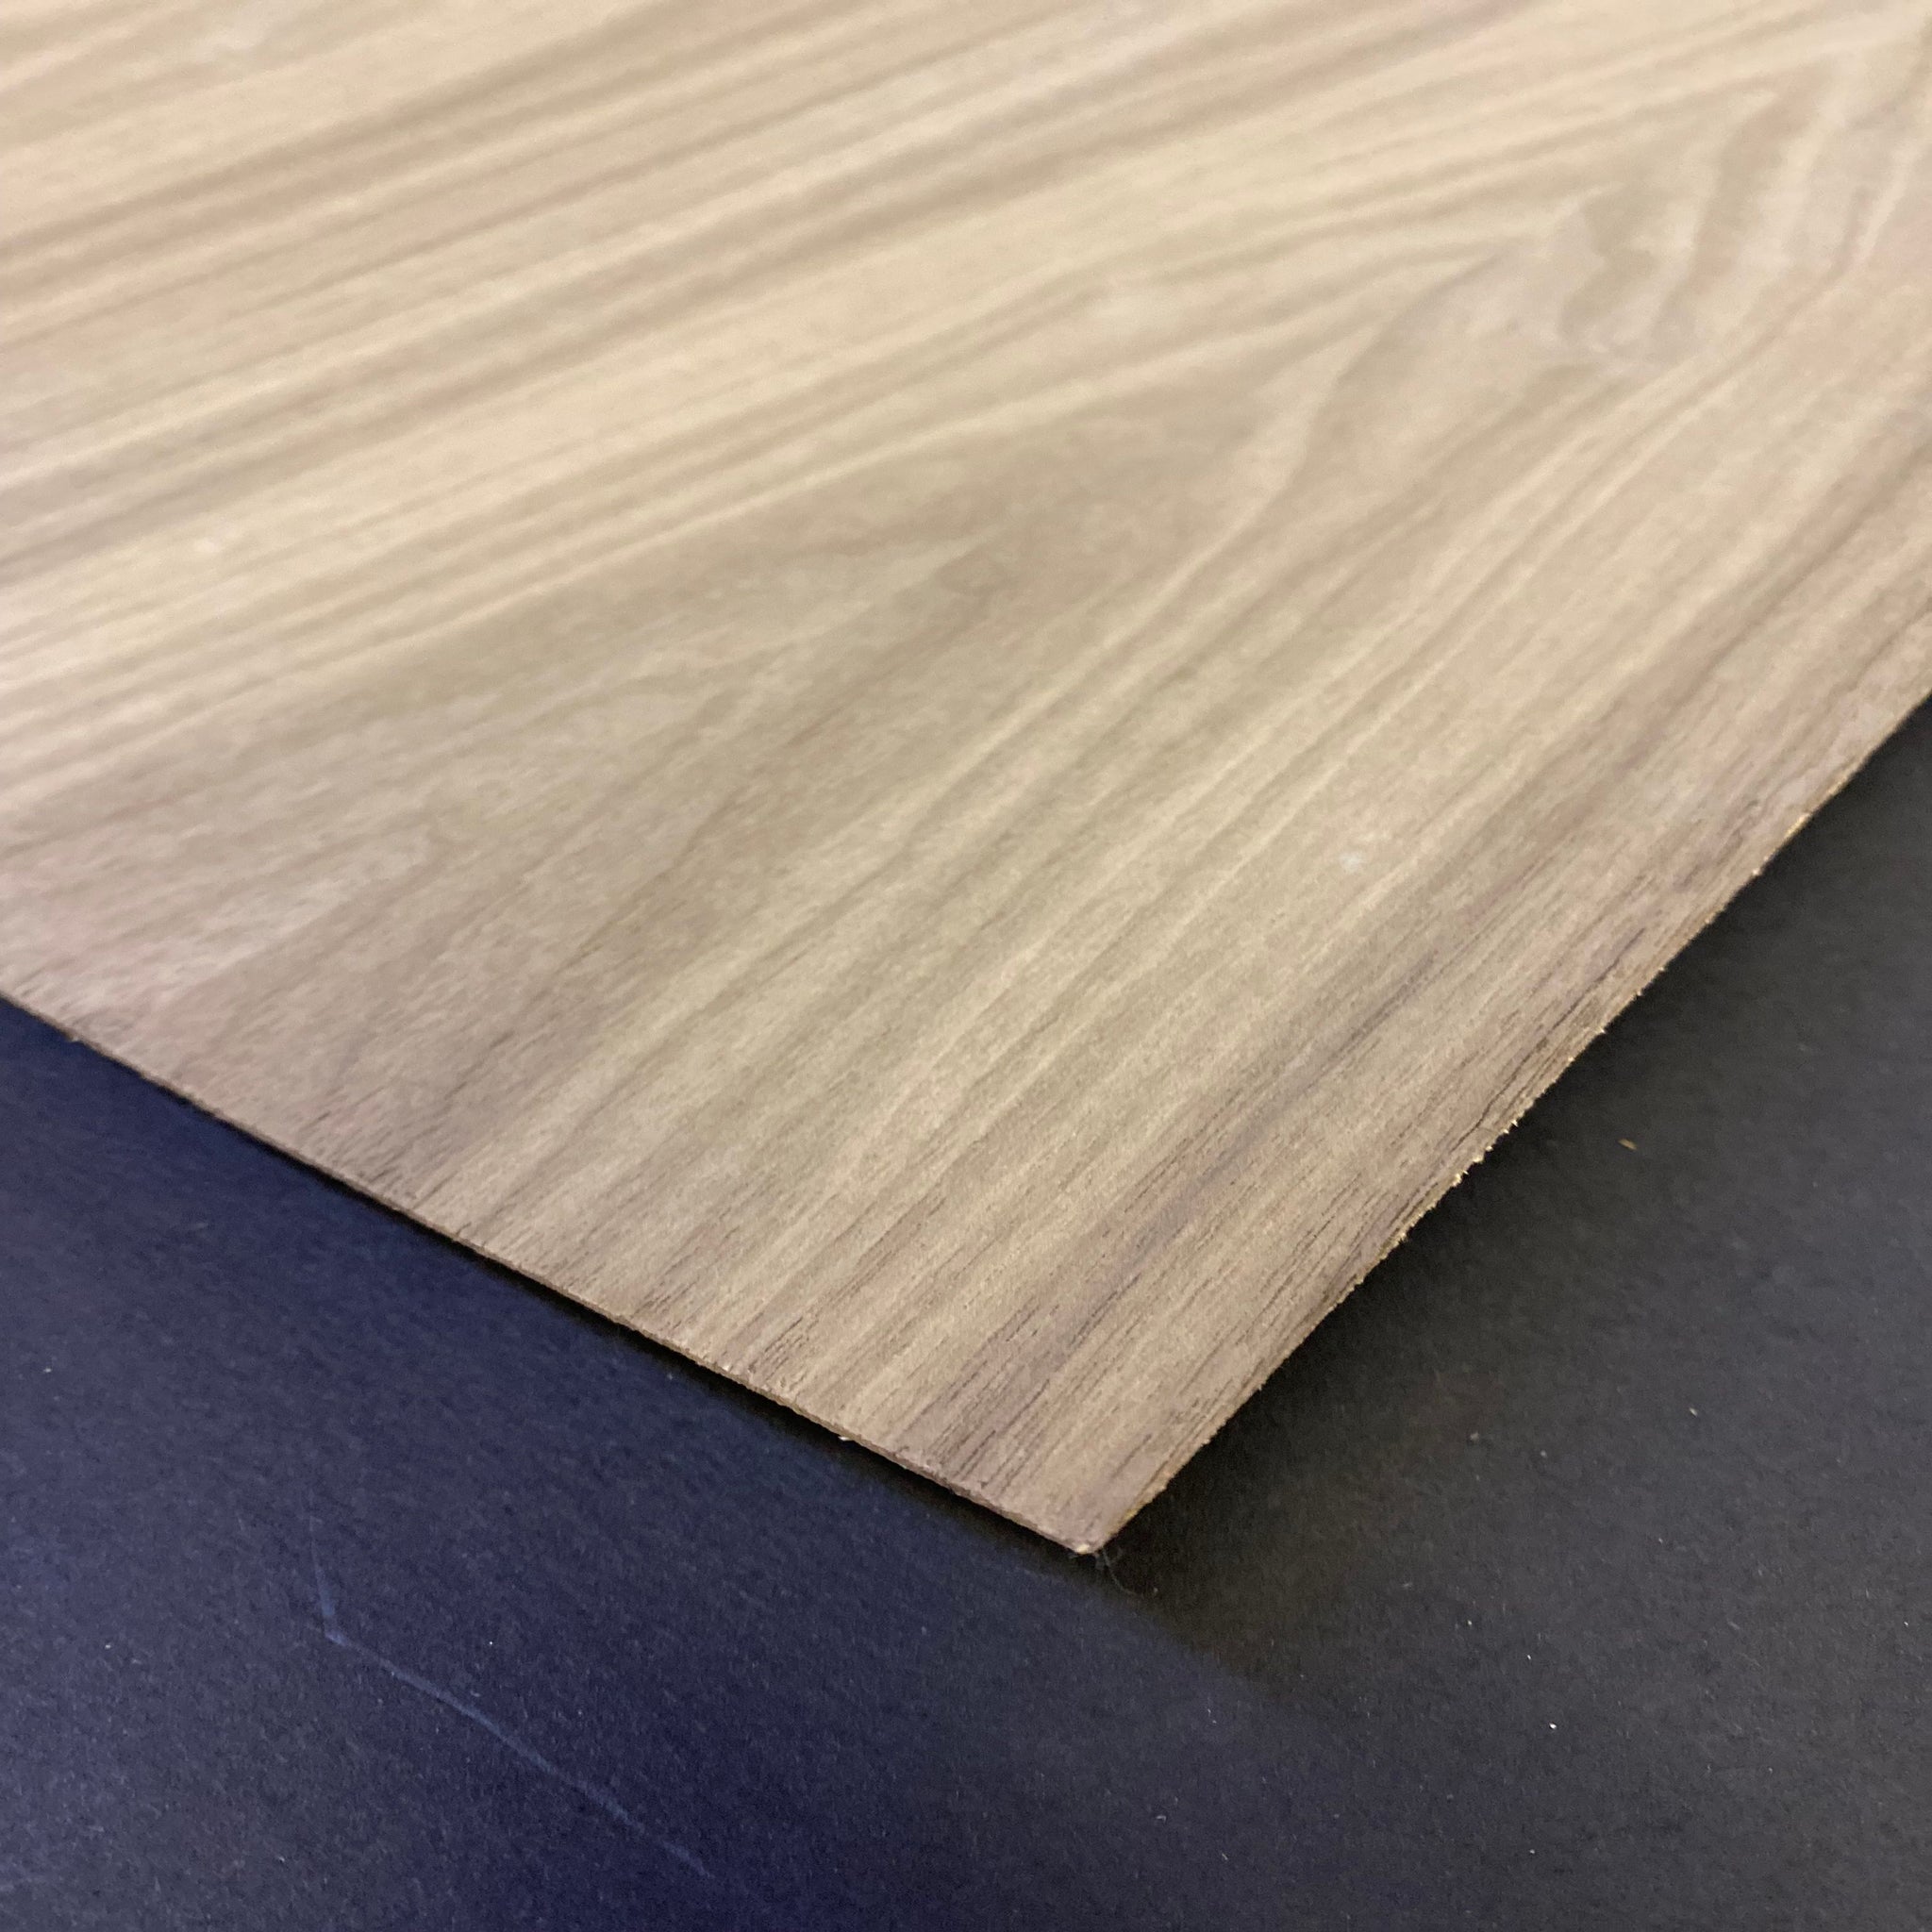 Walnut Veneered MDF Wood Sheets Cut To Size